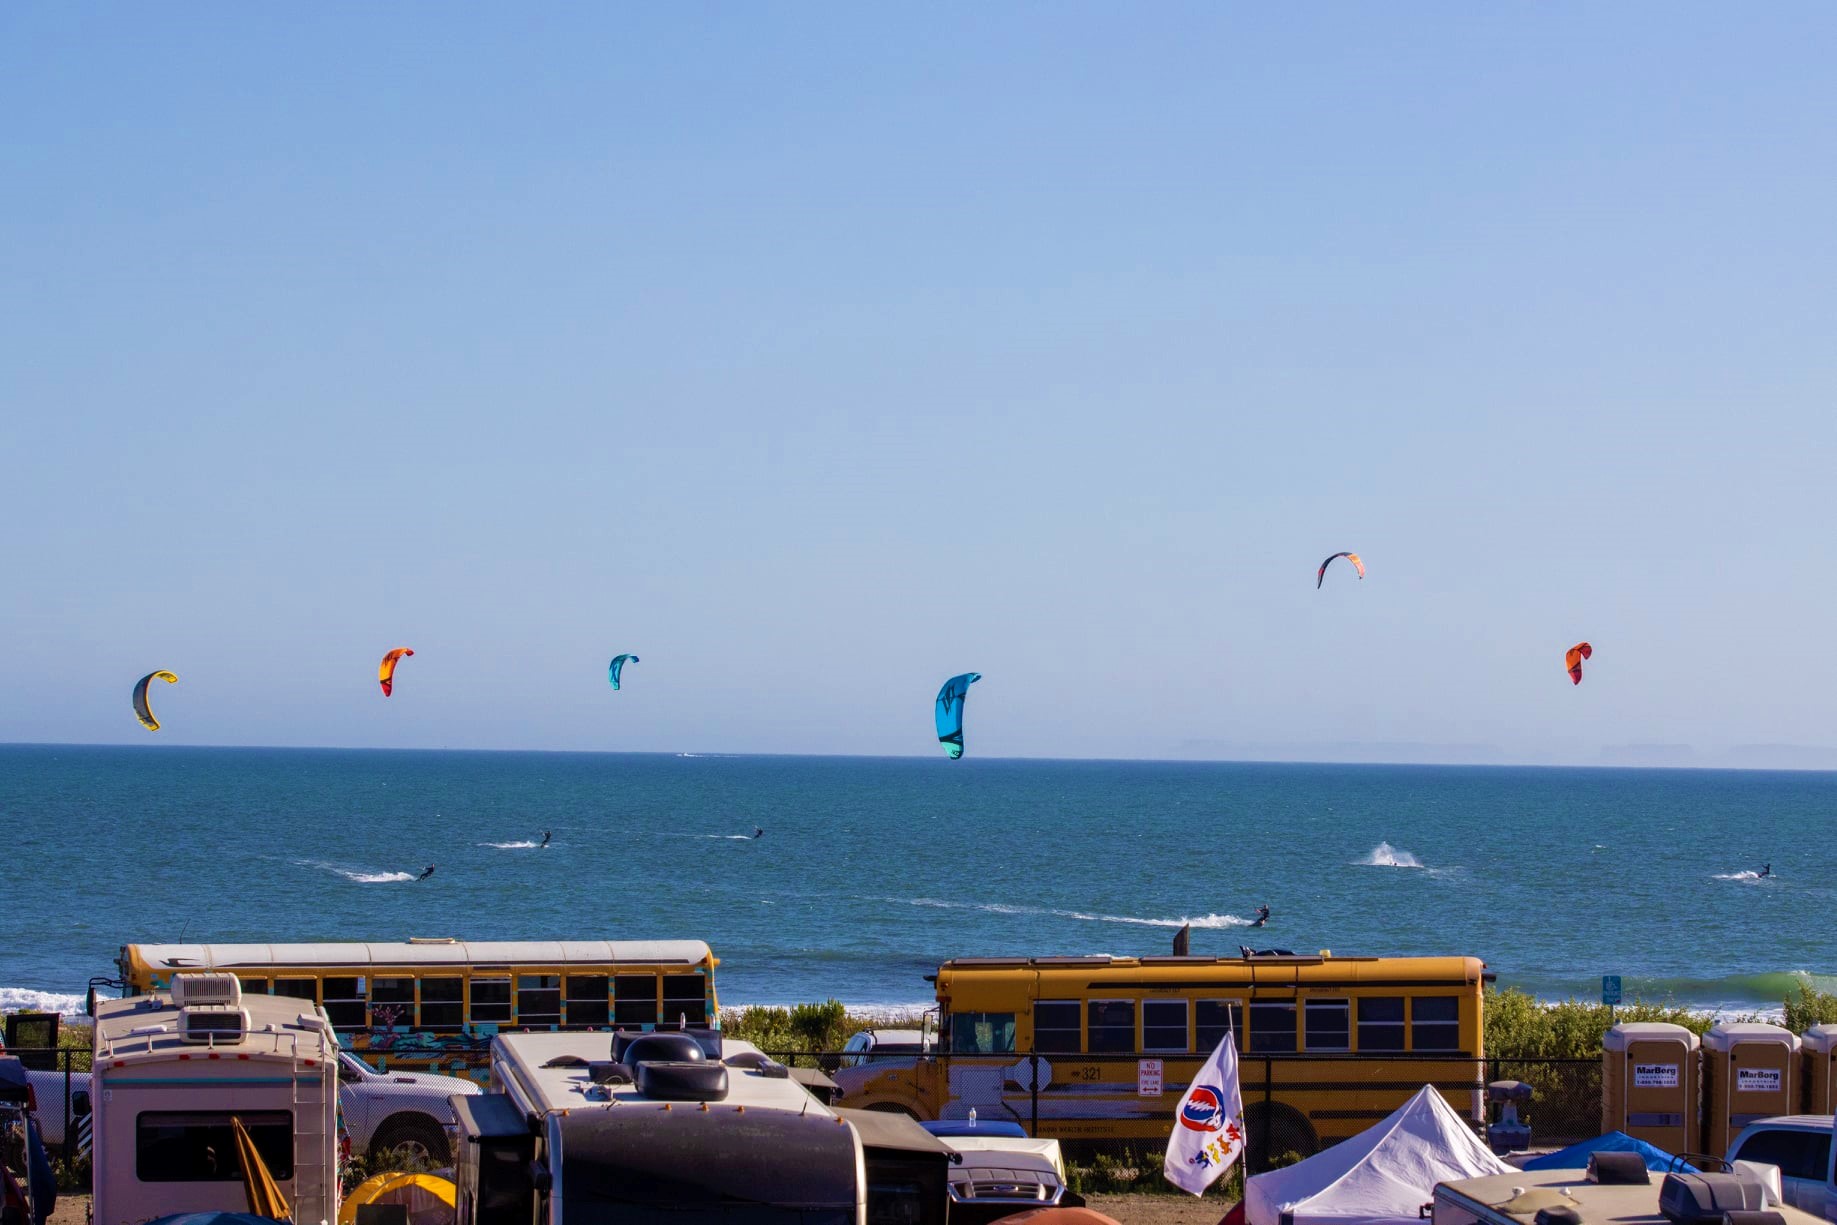 Kitesurfing in Ventura